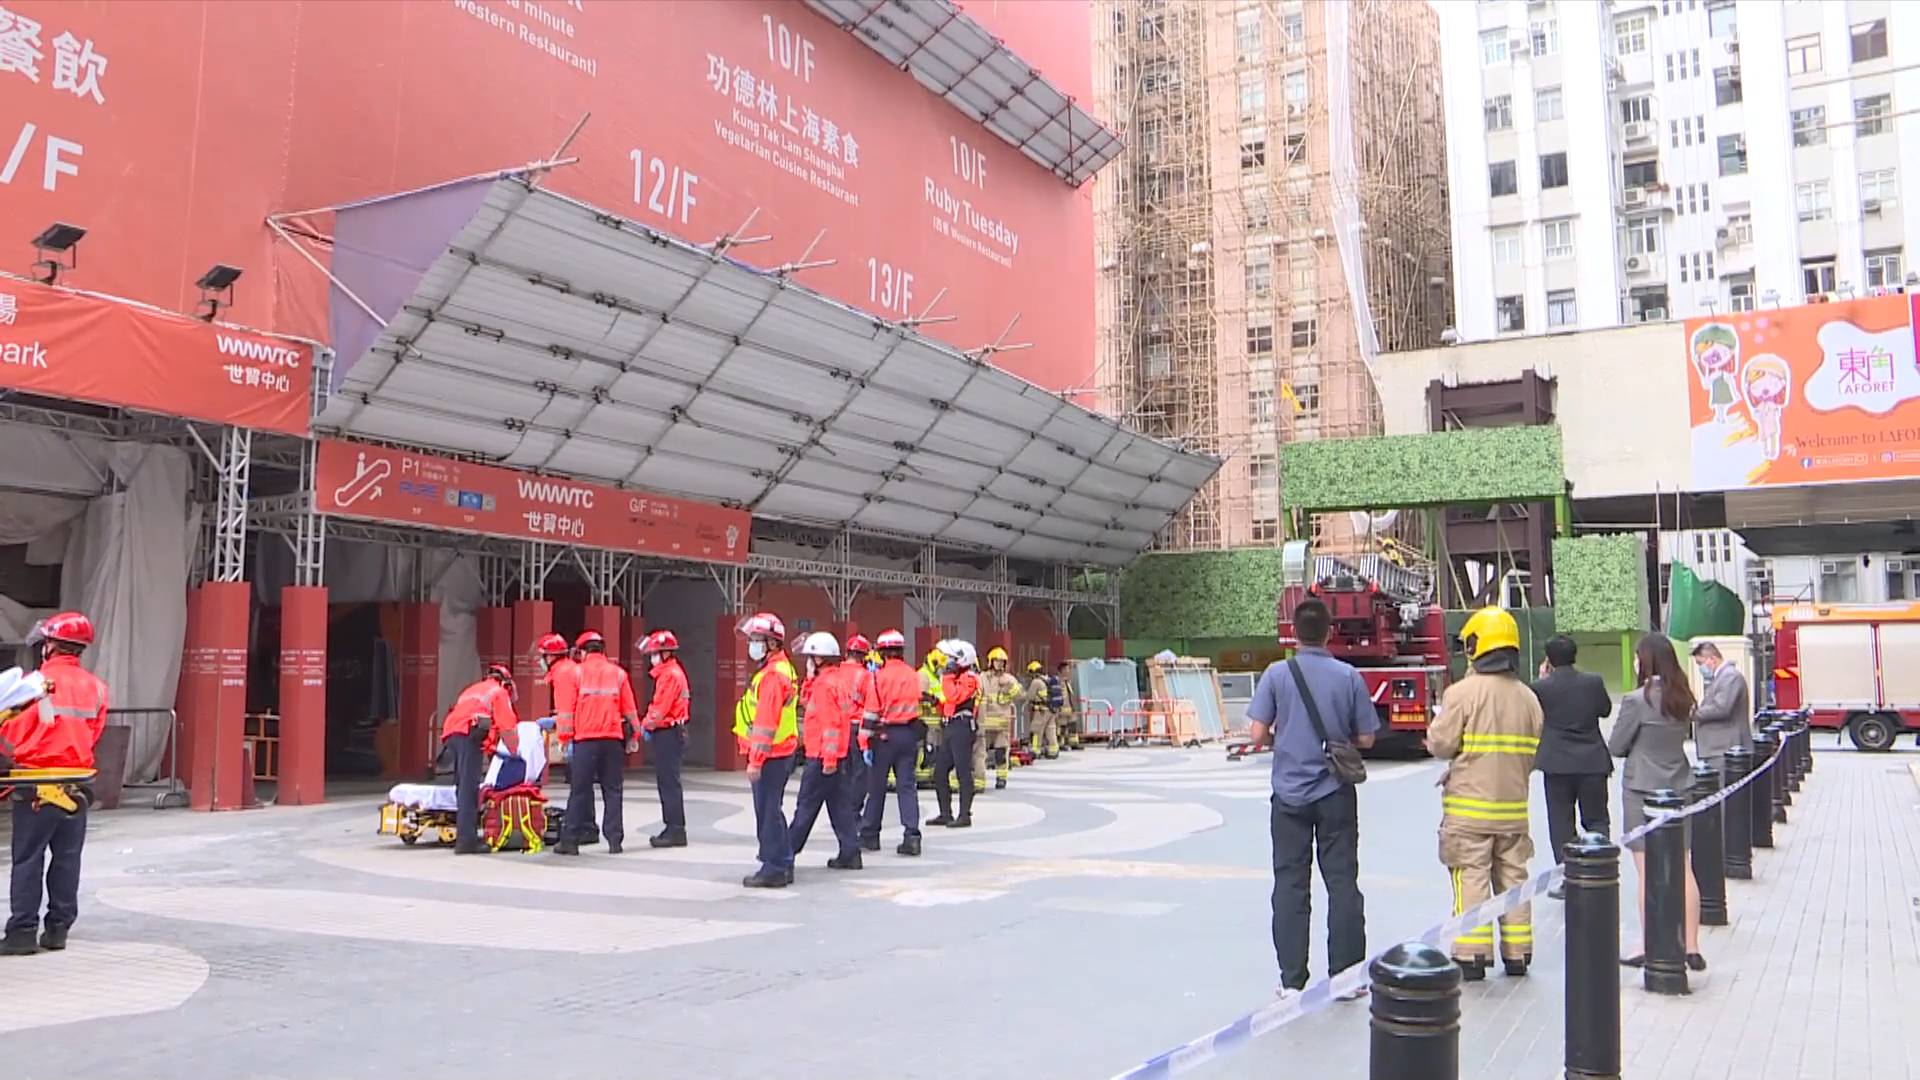 GLOBALink | 12 hospitalized after major fire at Hong Kong's World Trade Center